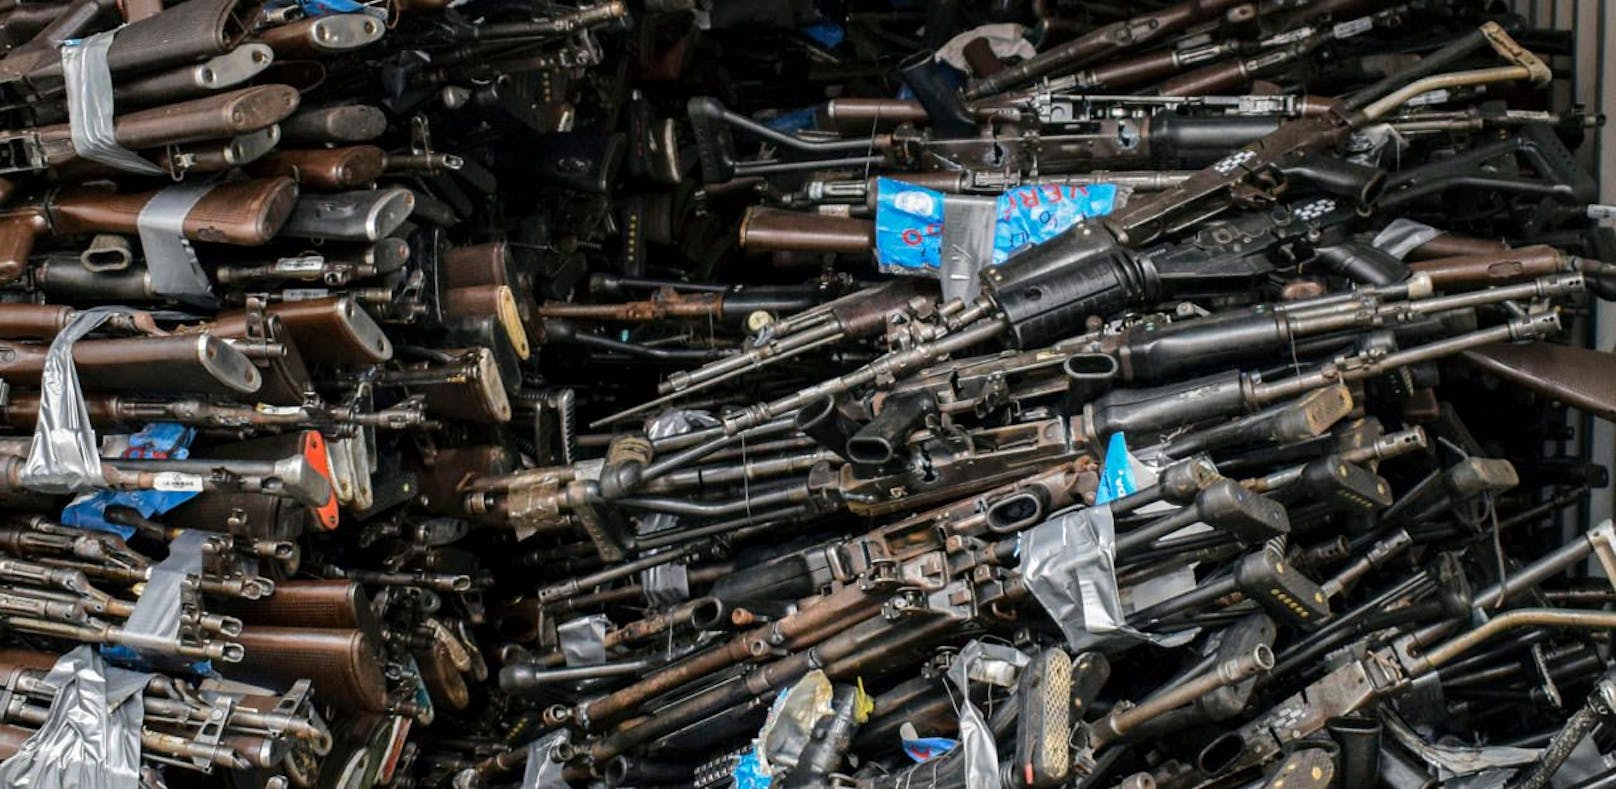 UNO vernichtet 69 Tonnen Waffen in Kolumbien